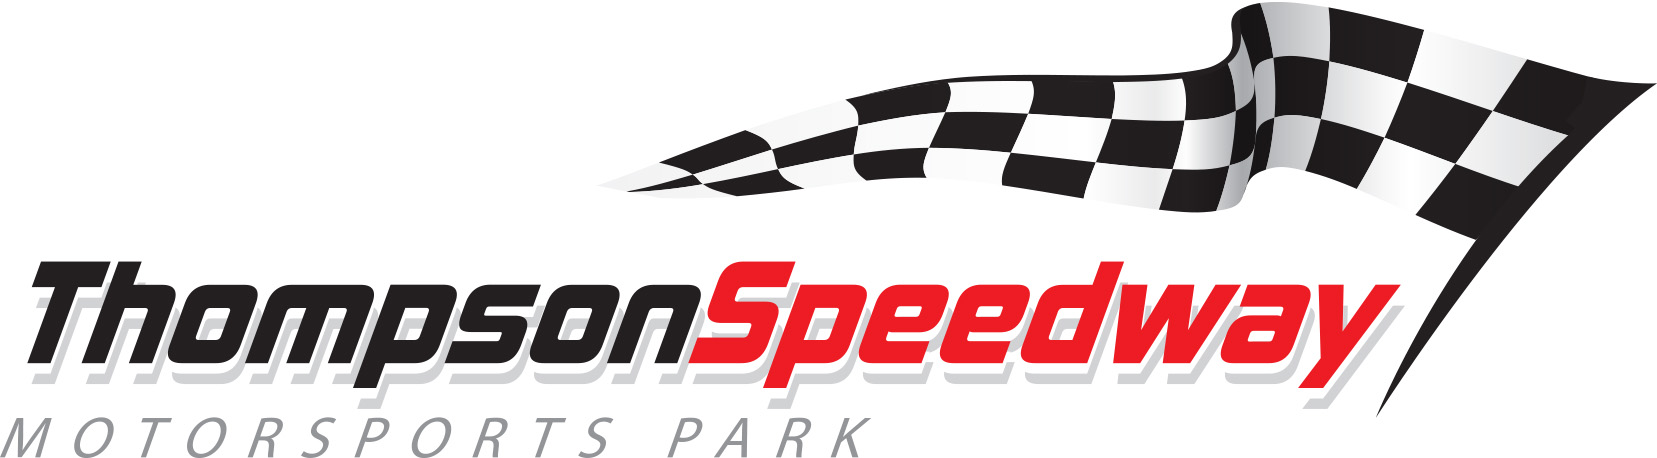 Thompson-Speedway_logo.jpg